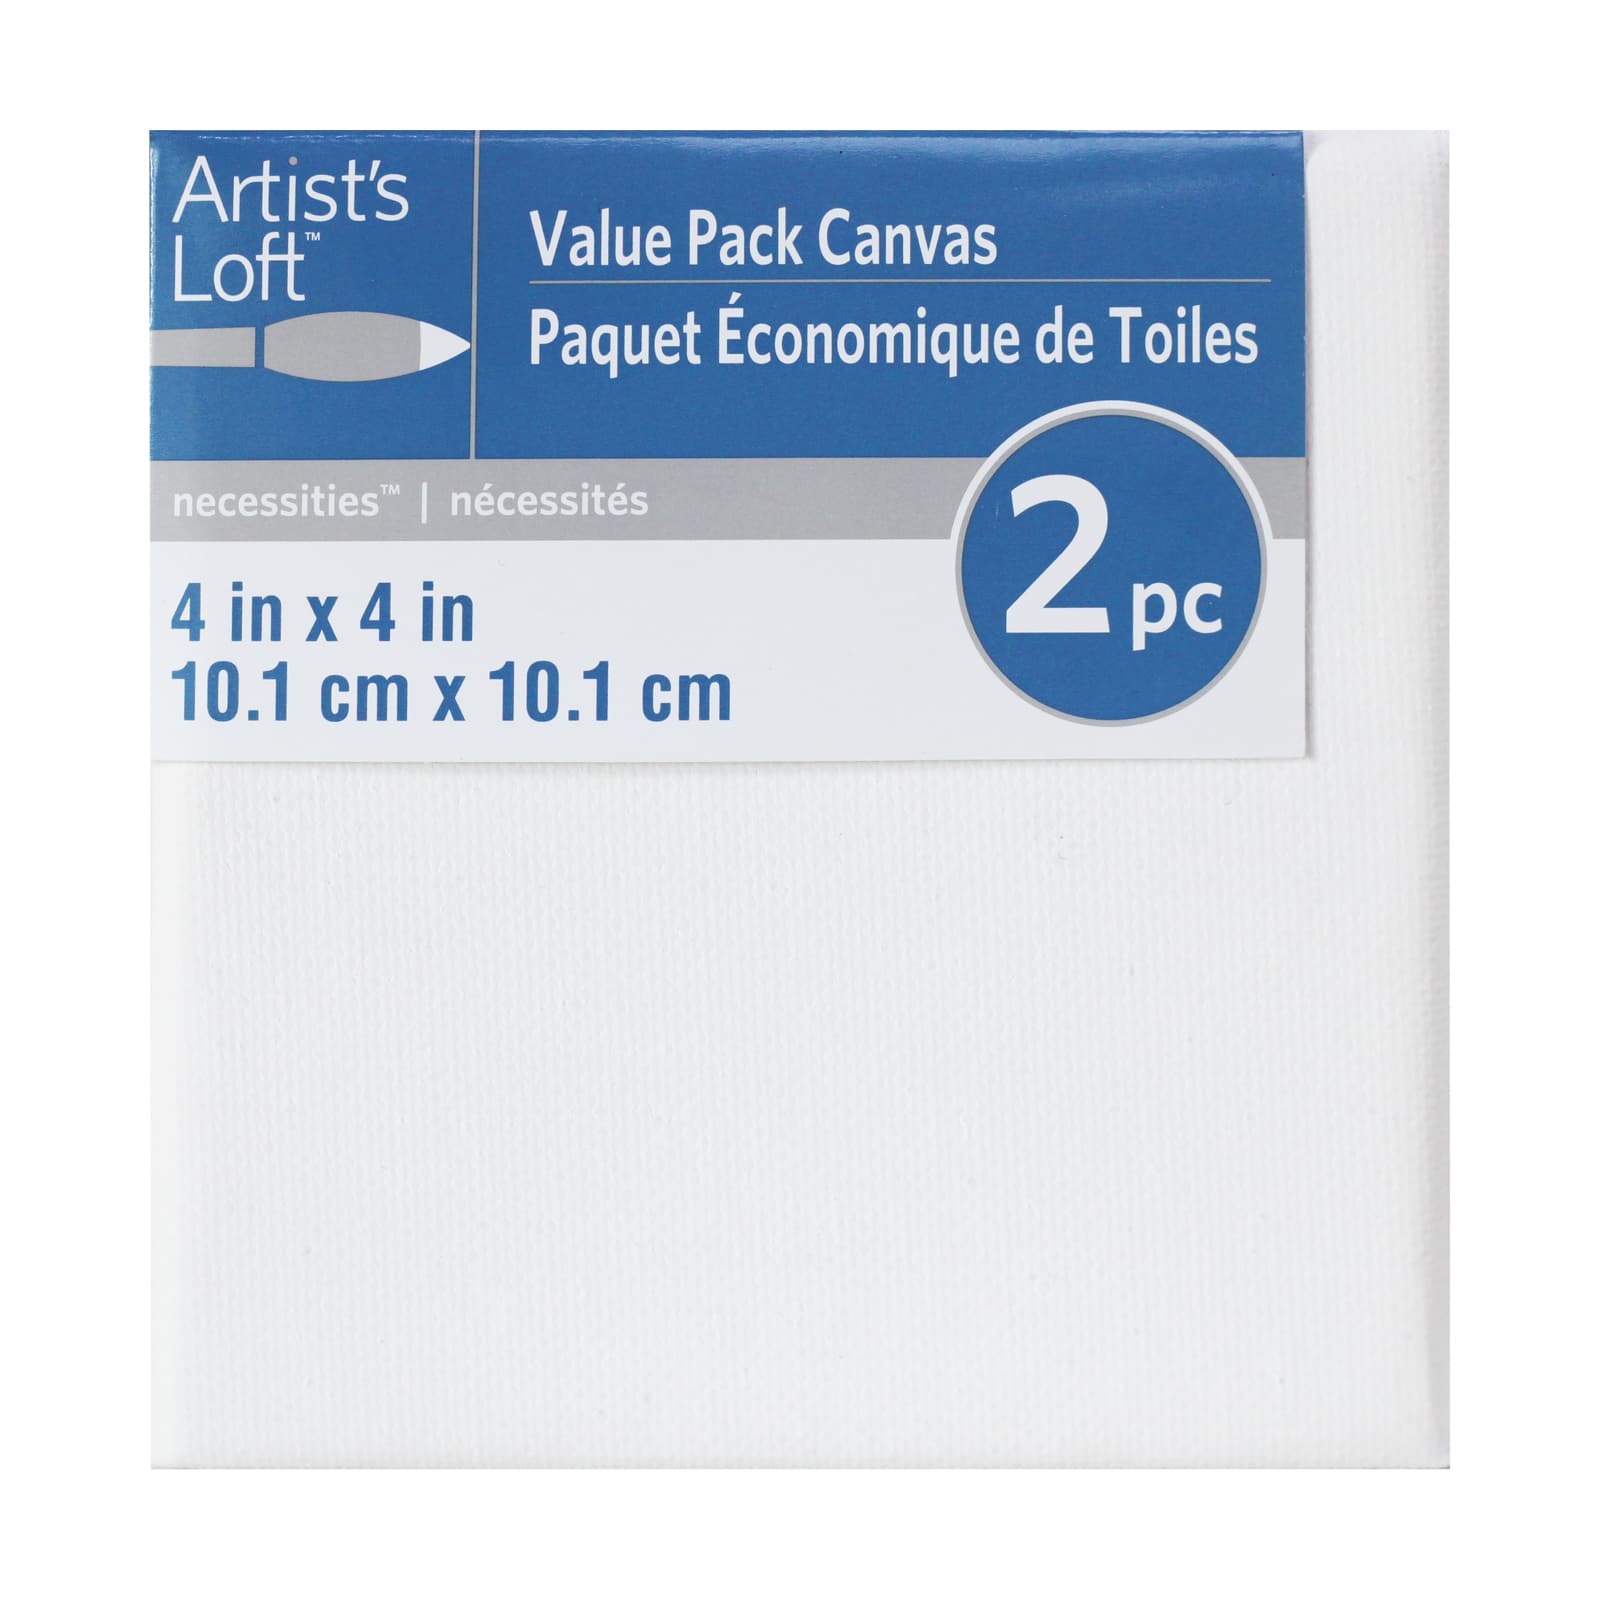 2 Pack Value Pack&#xA0;Canvas by Artist&#x27;s Loft&#xAE; Necessities&#x2122;